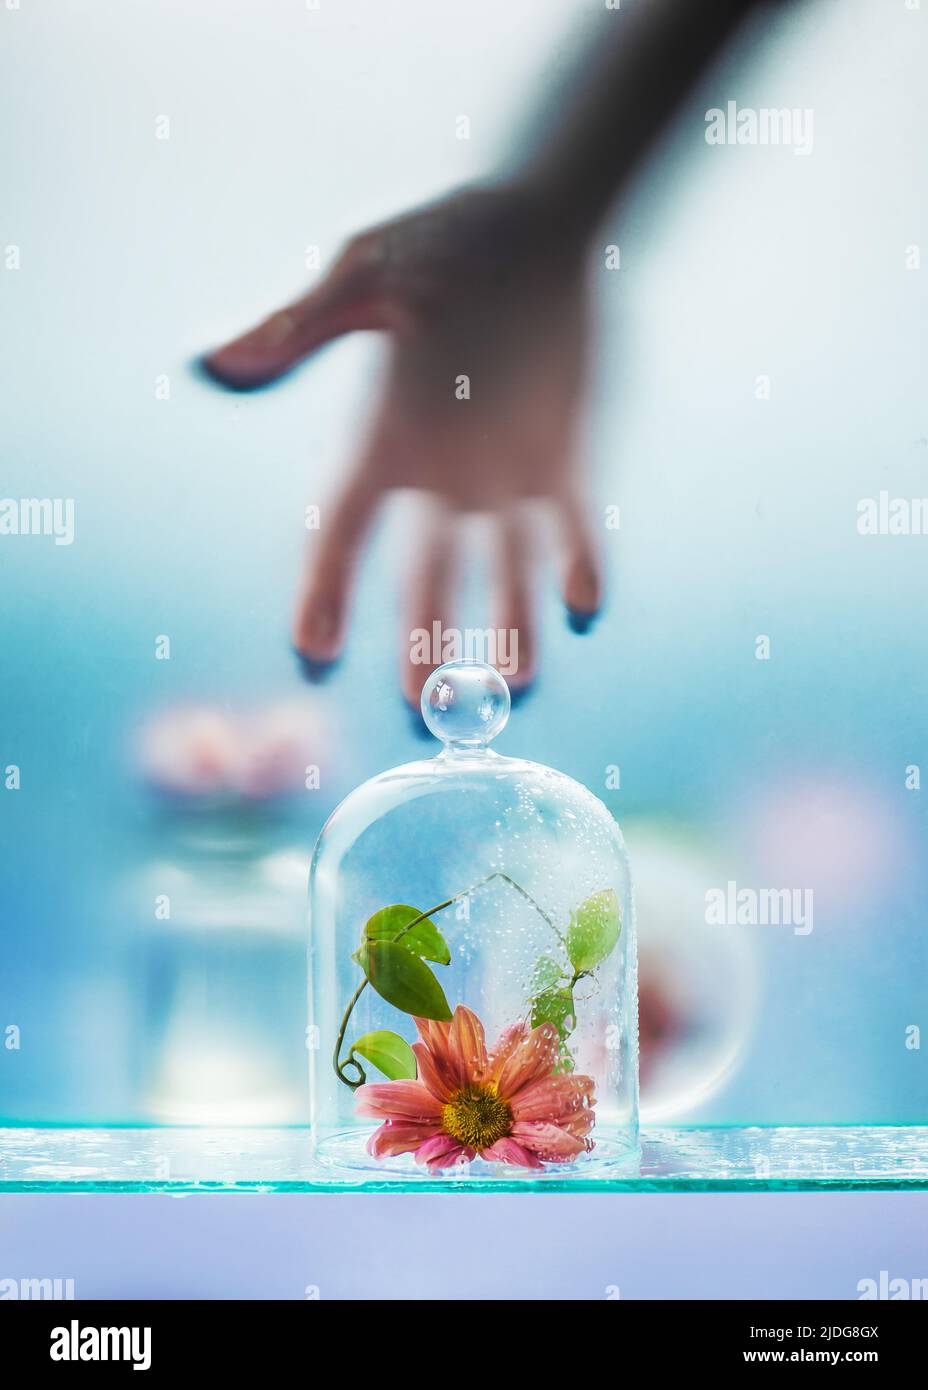 Flower under a glass dome, reaching hand, matte glass still life Stock Photo